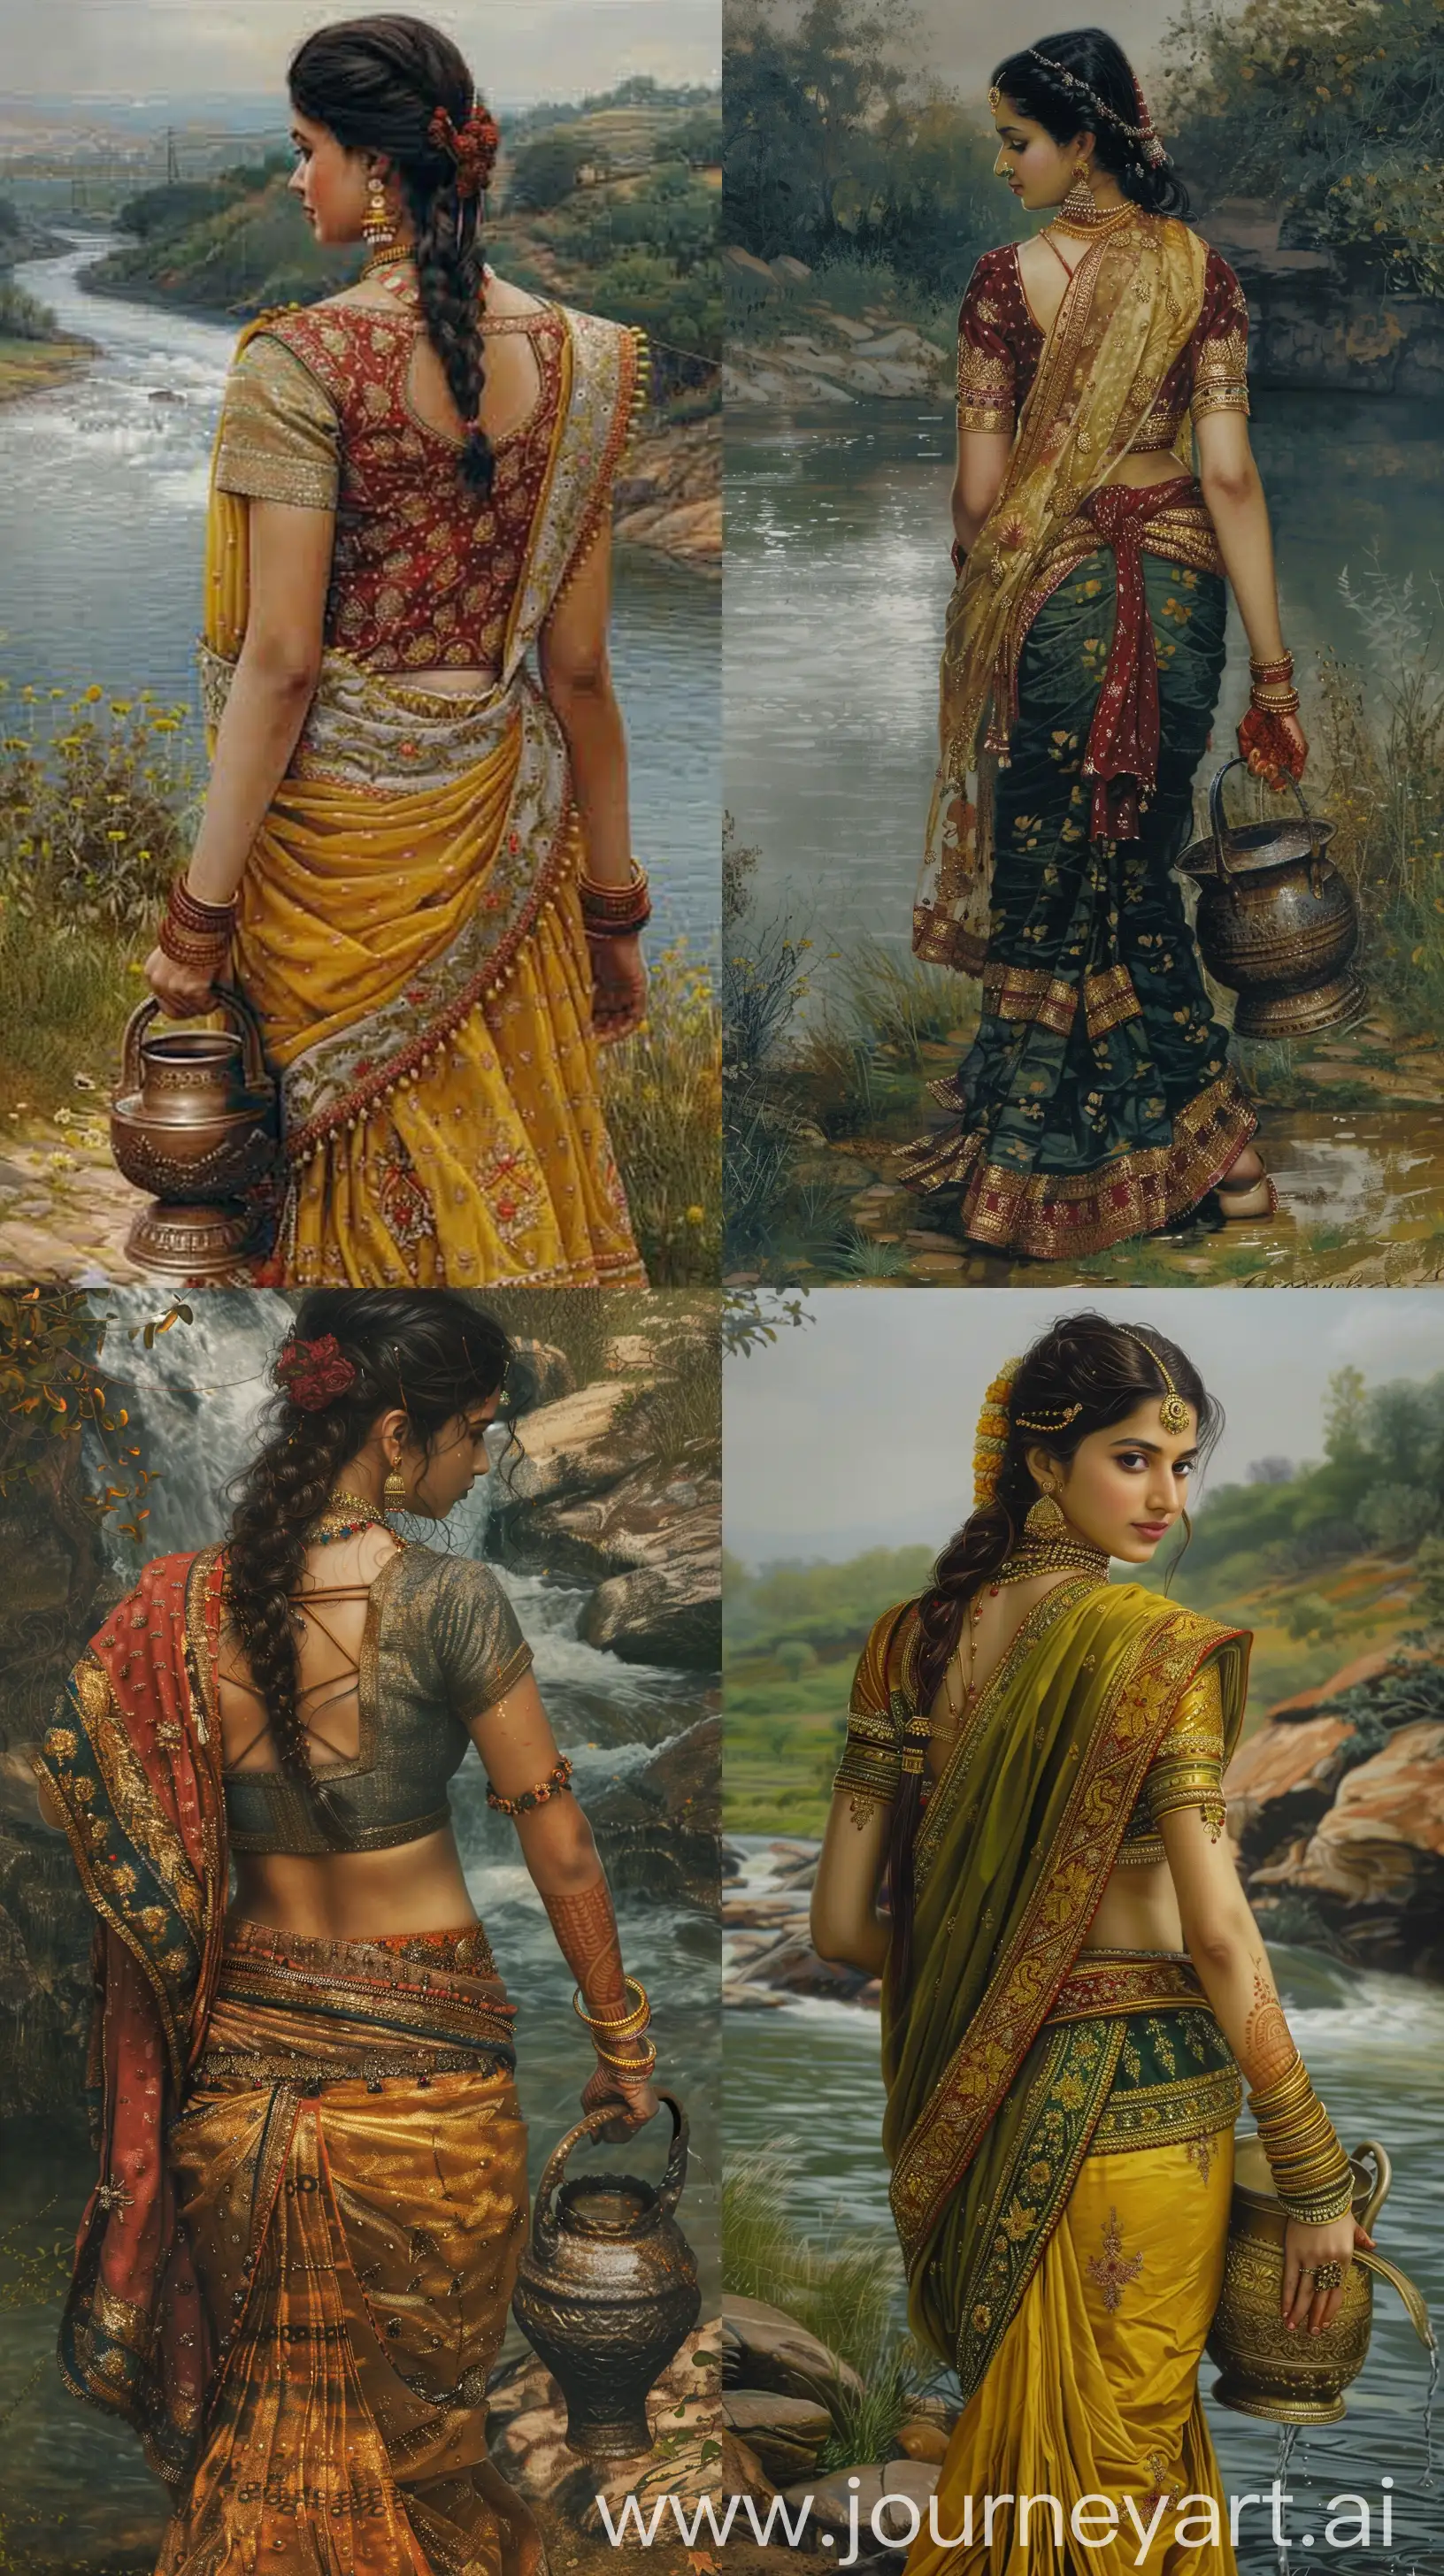 Indian-Woman-Carrying-Water-Pot-by-Riverside-in-Raj-Ravi-Varma-Style